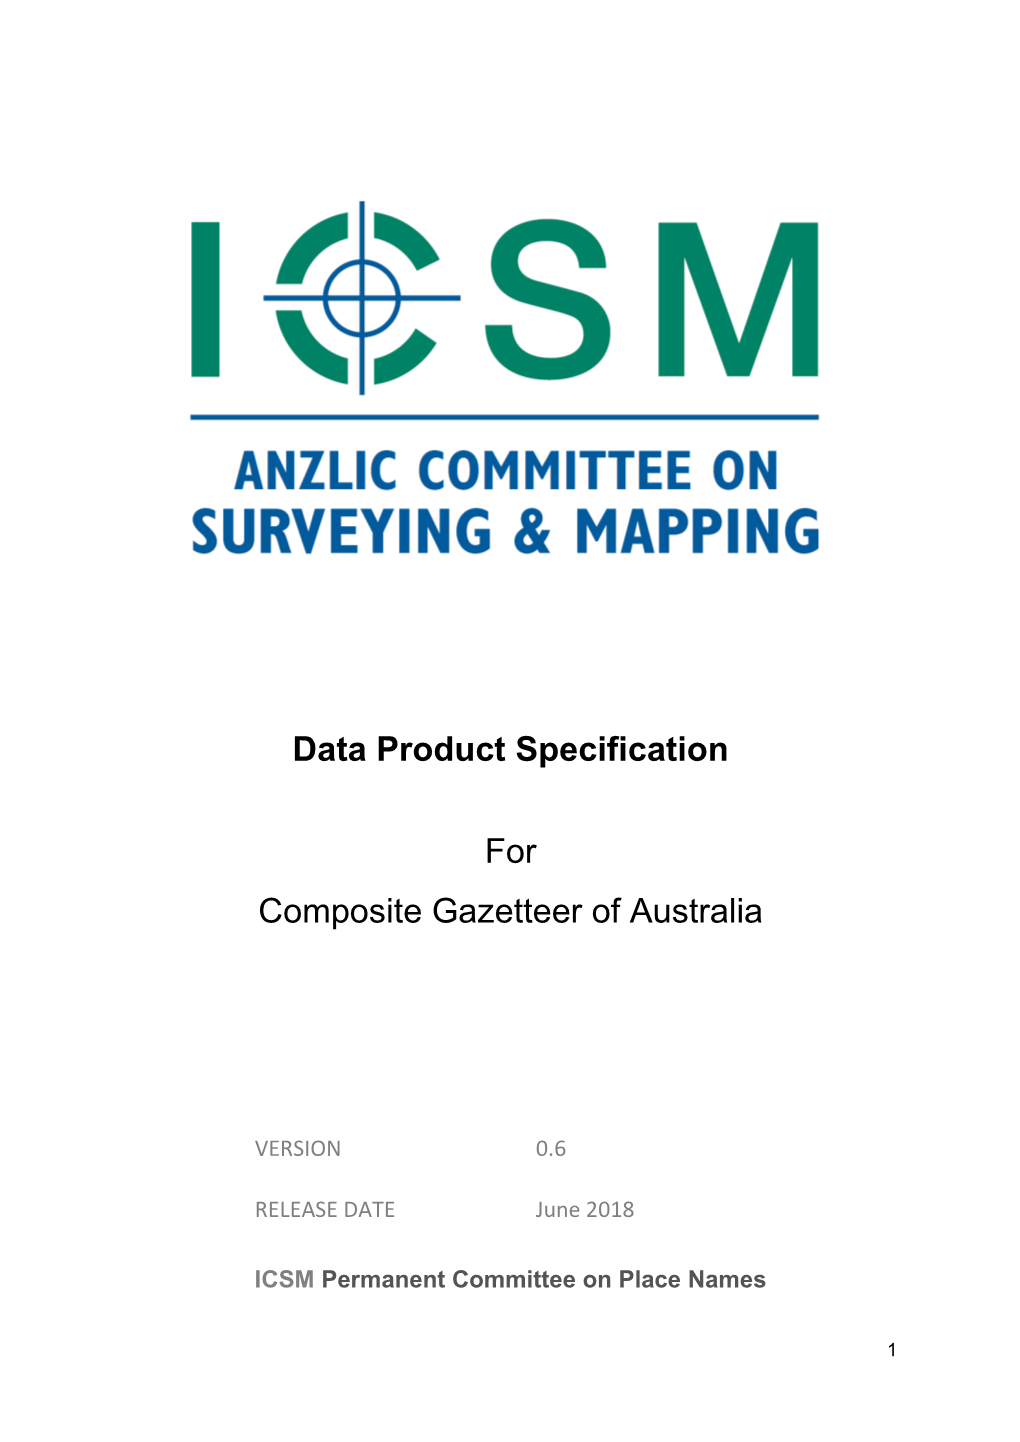 Data Product Specification for Composite Gazetteer of Australia